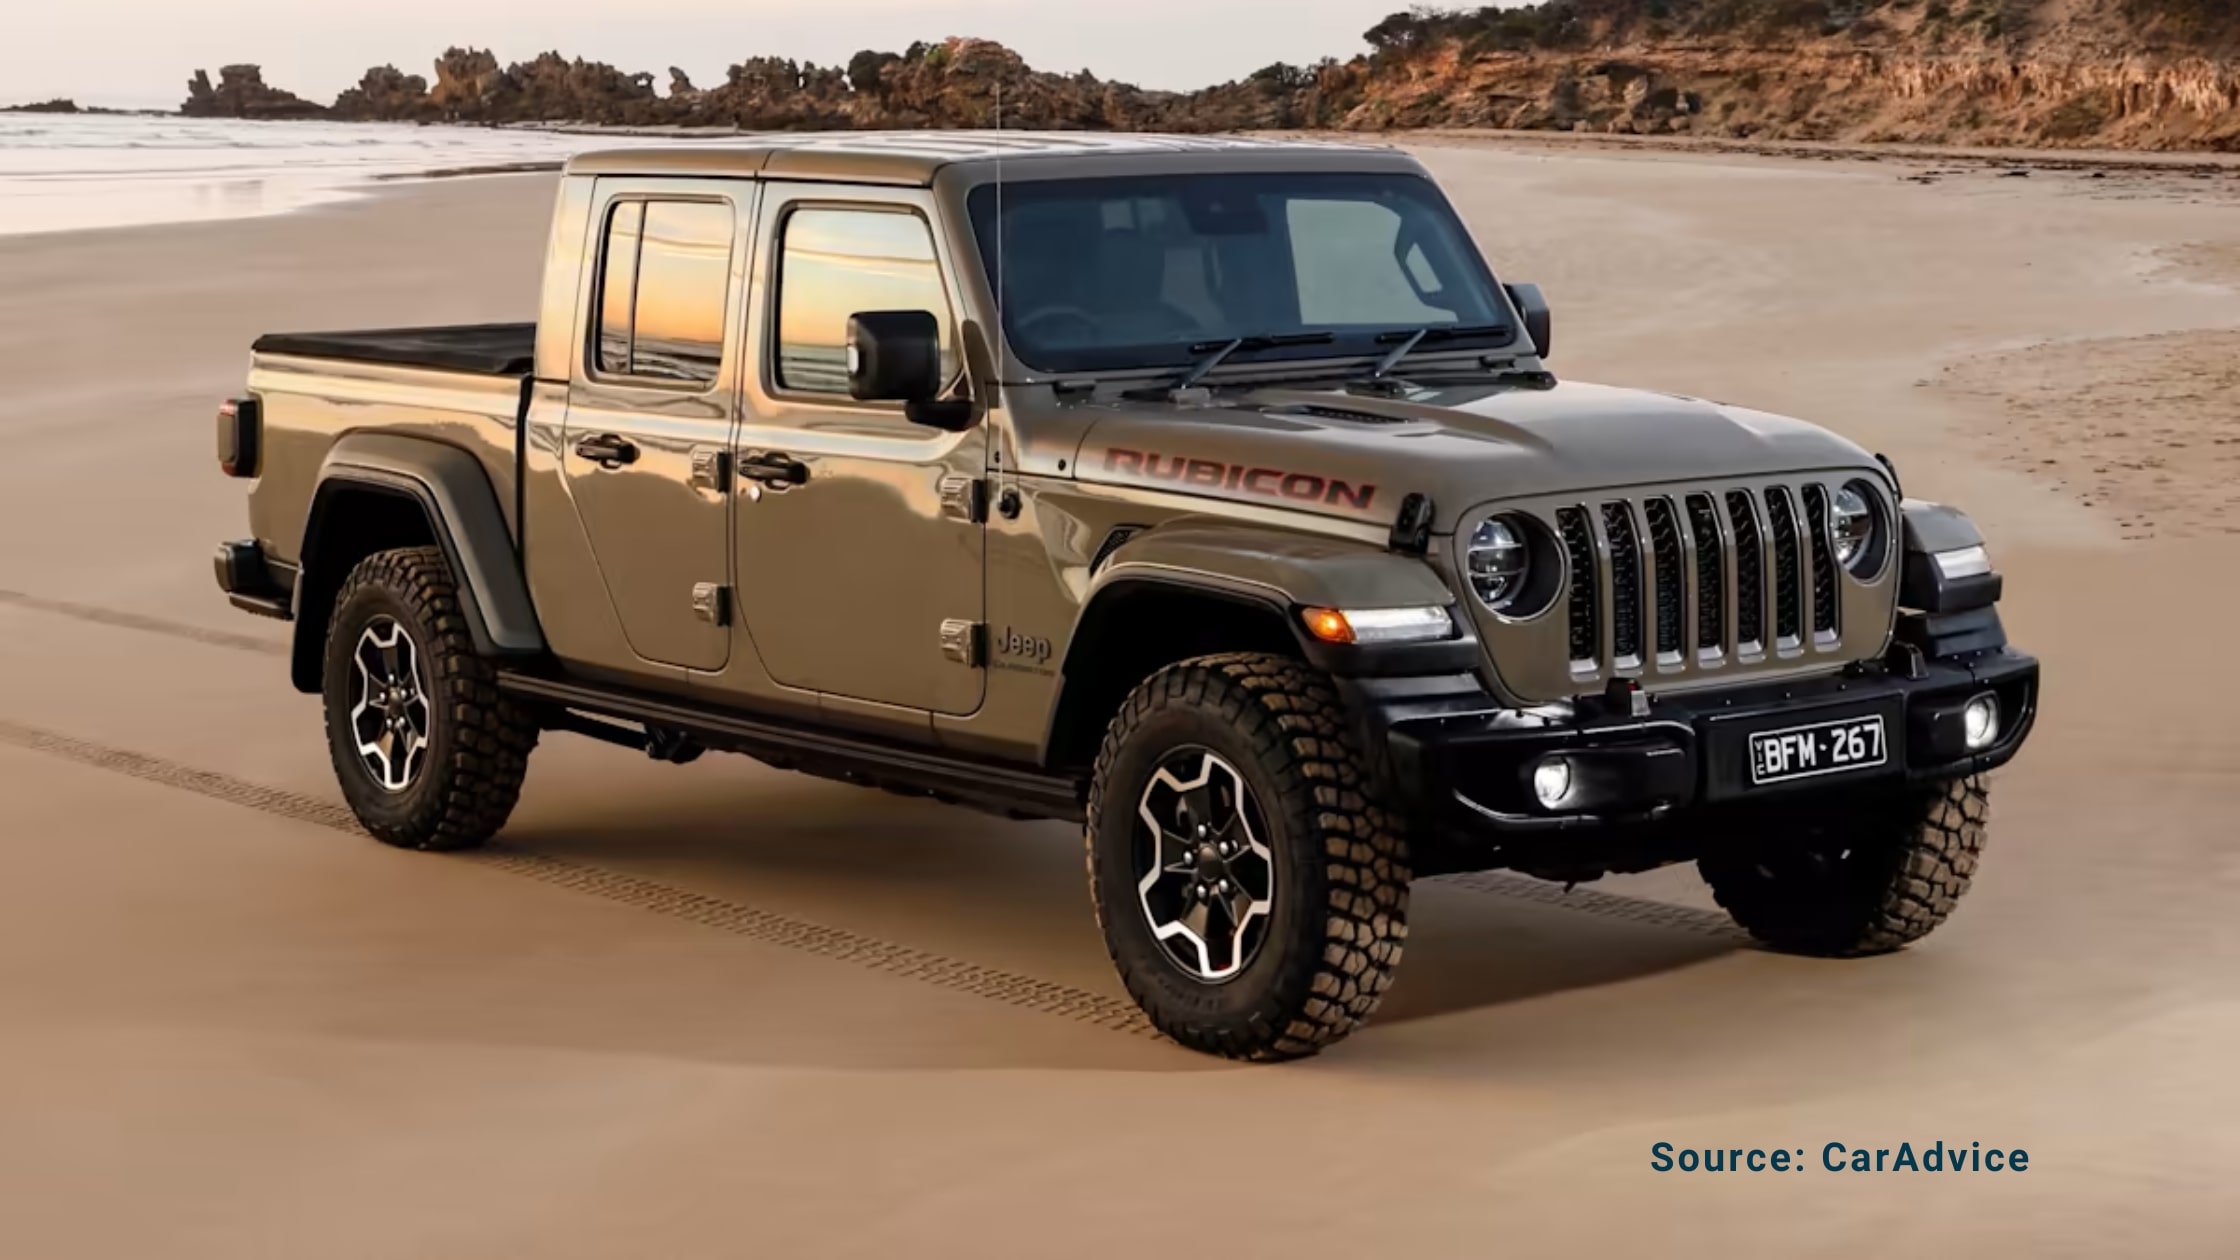 Car Model Names - brown Jeep Gladiator